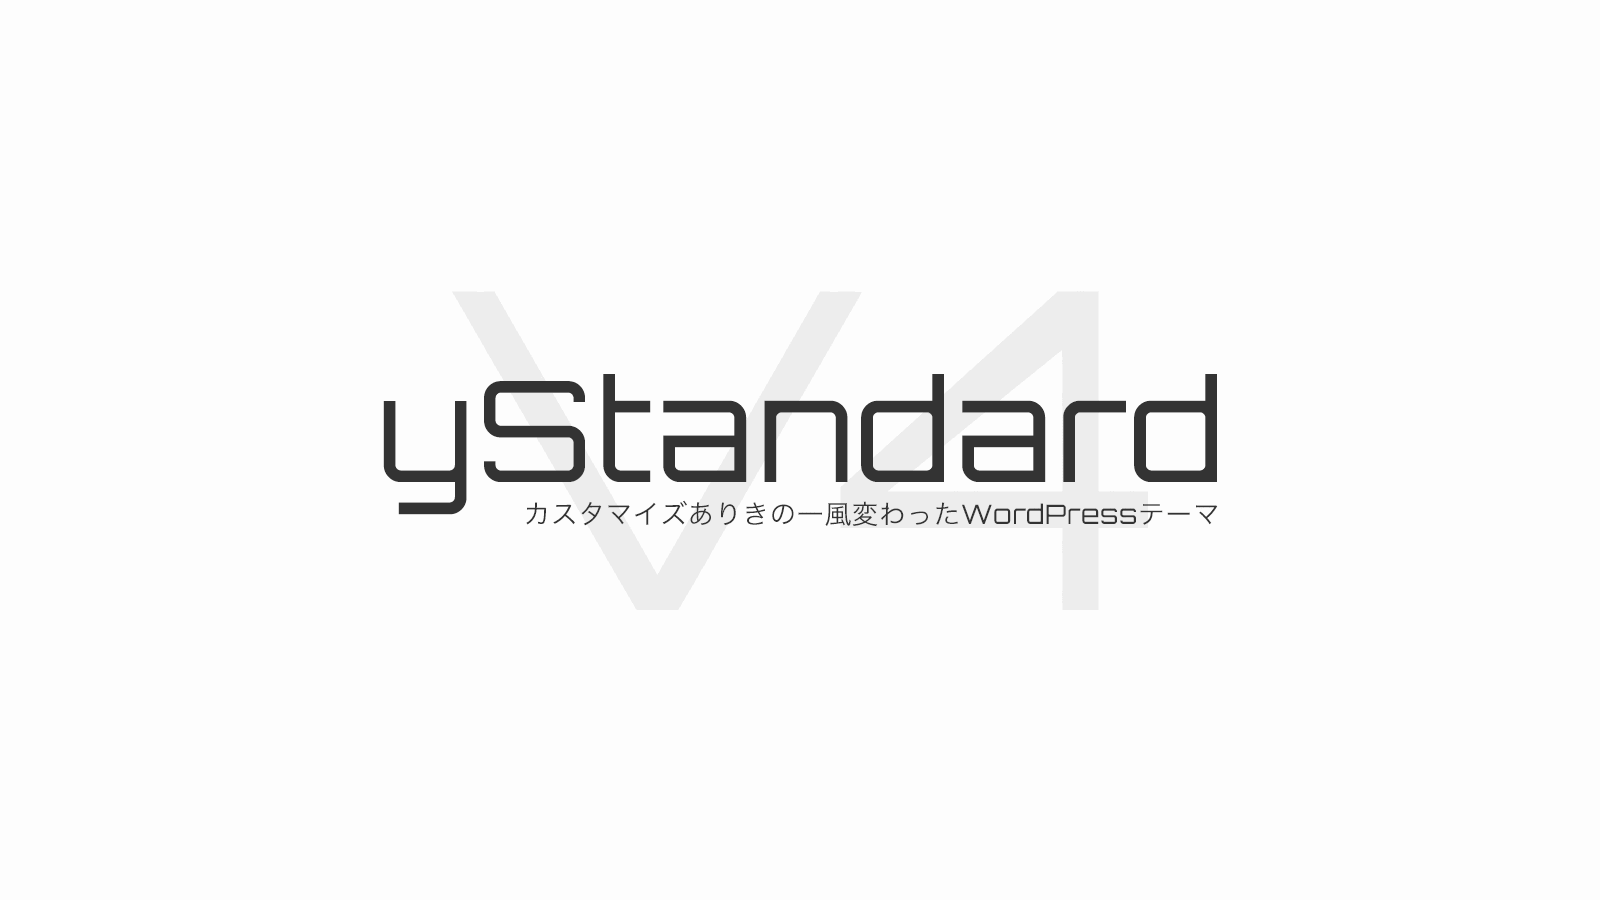 yStandard v4 リリース🎉 v3からの変更点やアップグレード方法について